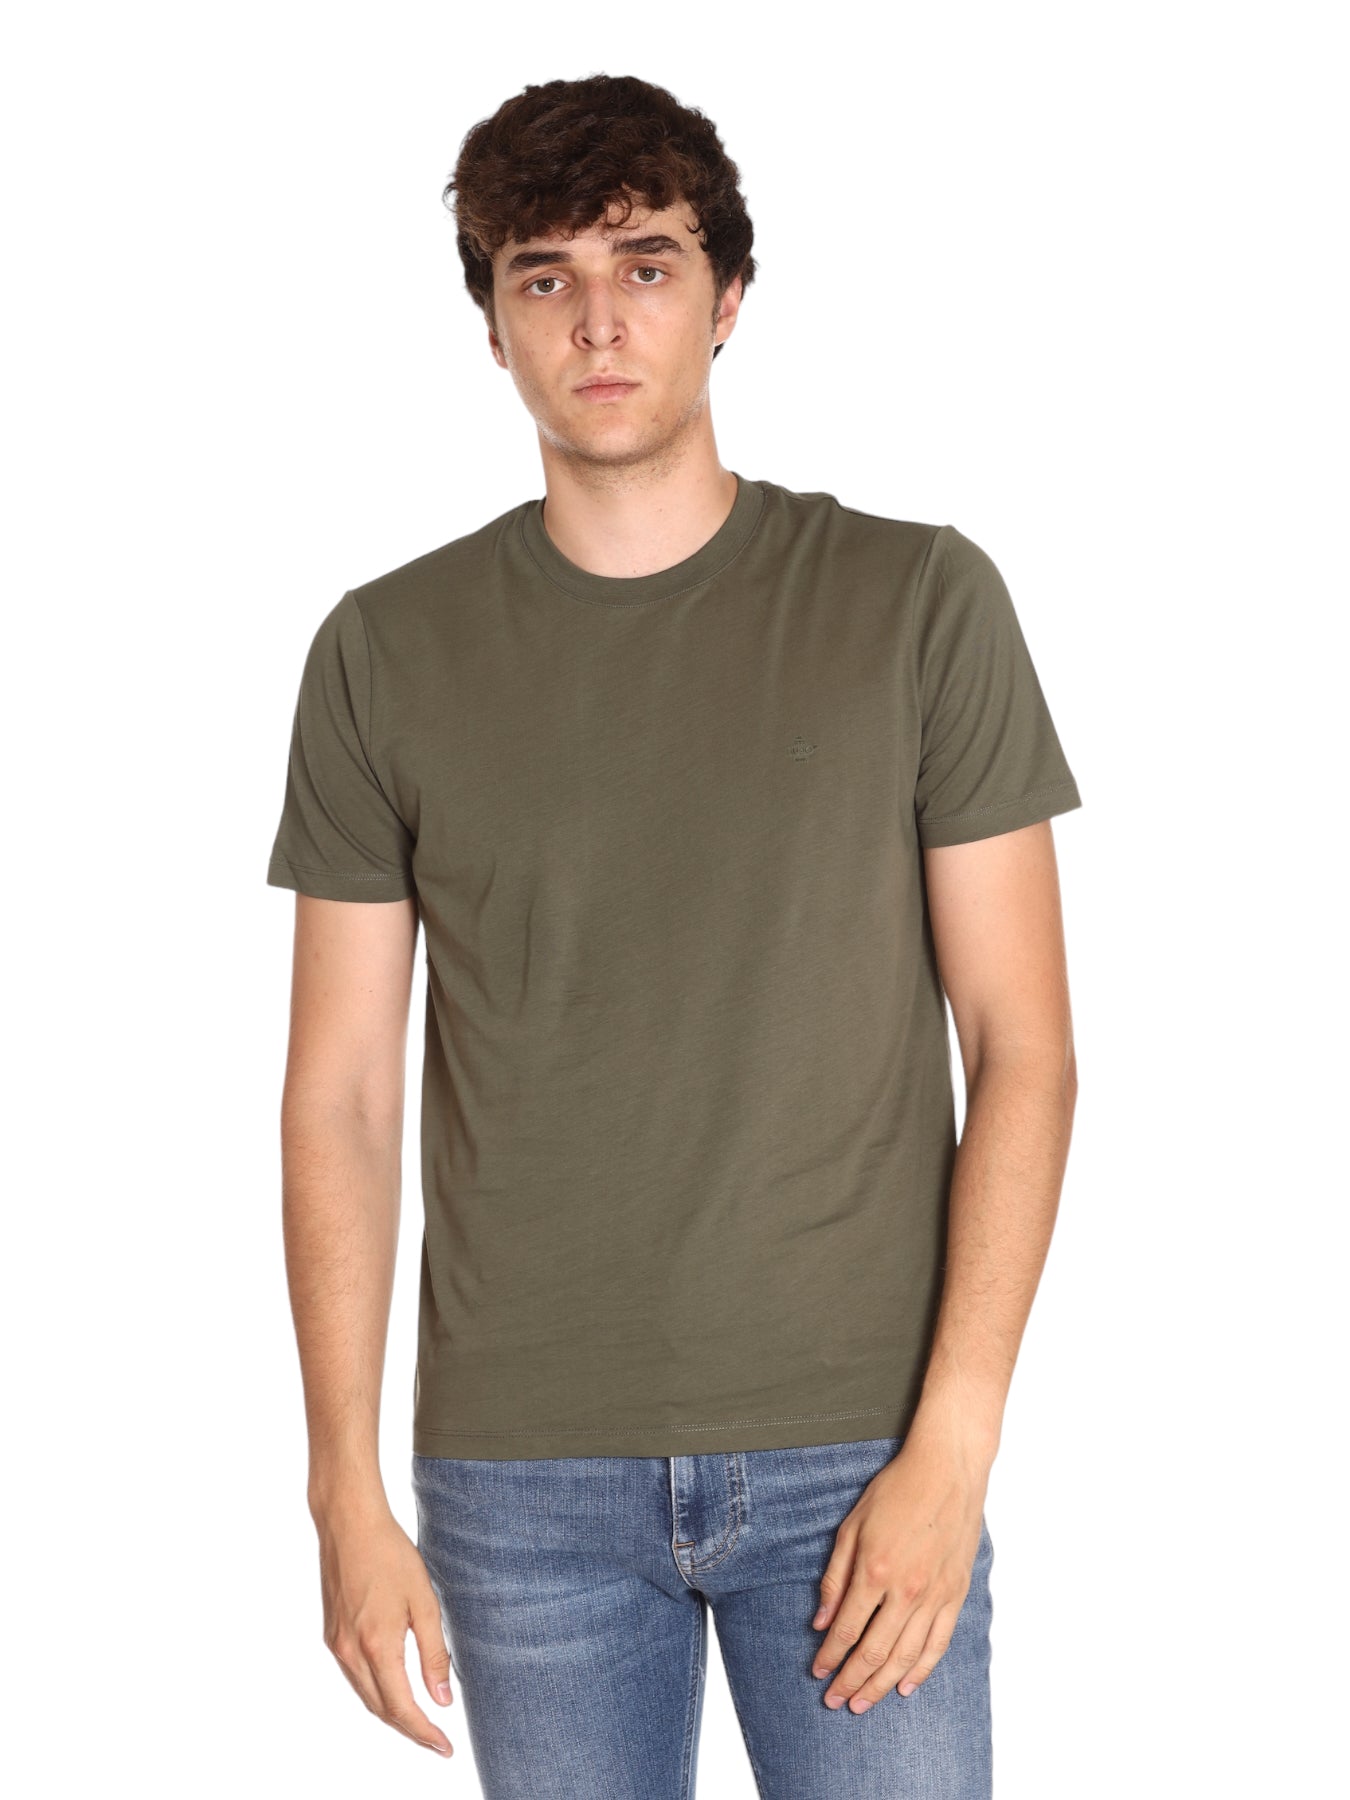 T-Shirt M223p204pimatee Army Green